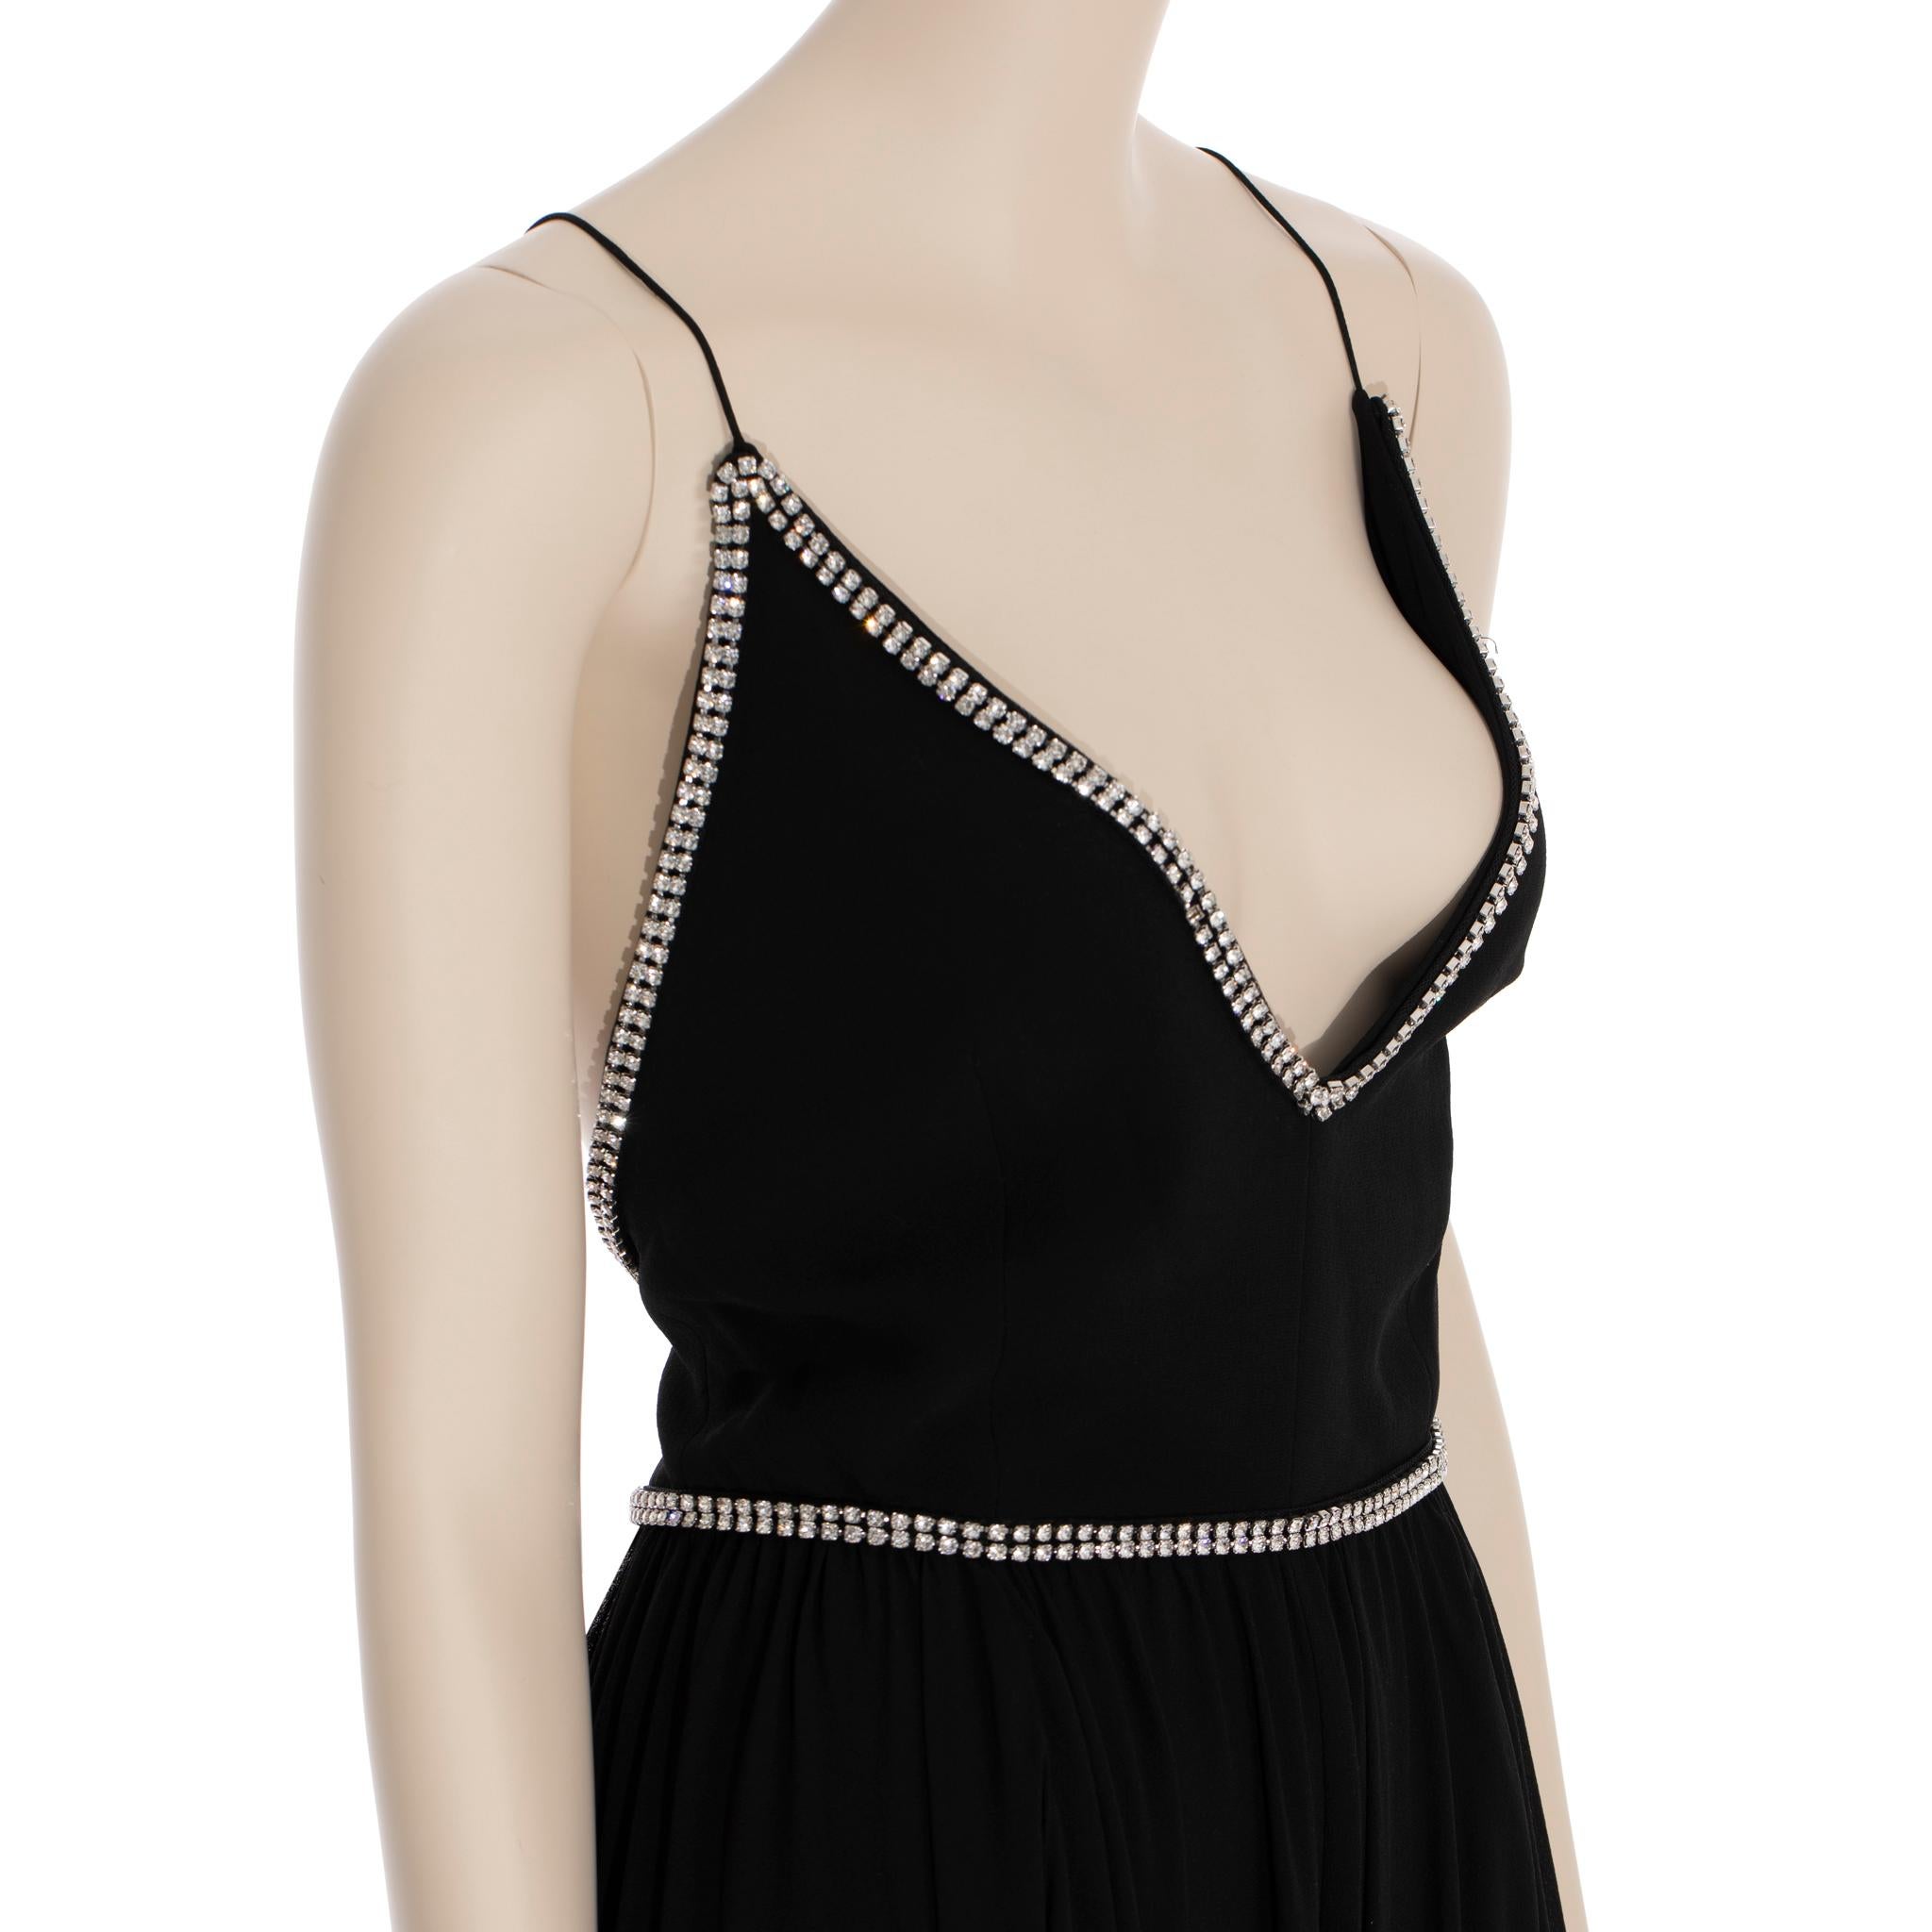 Saint Laurent Black Evening Gown With Crystal Details 38 FR For Sale 1